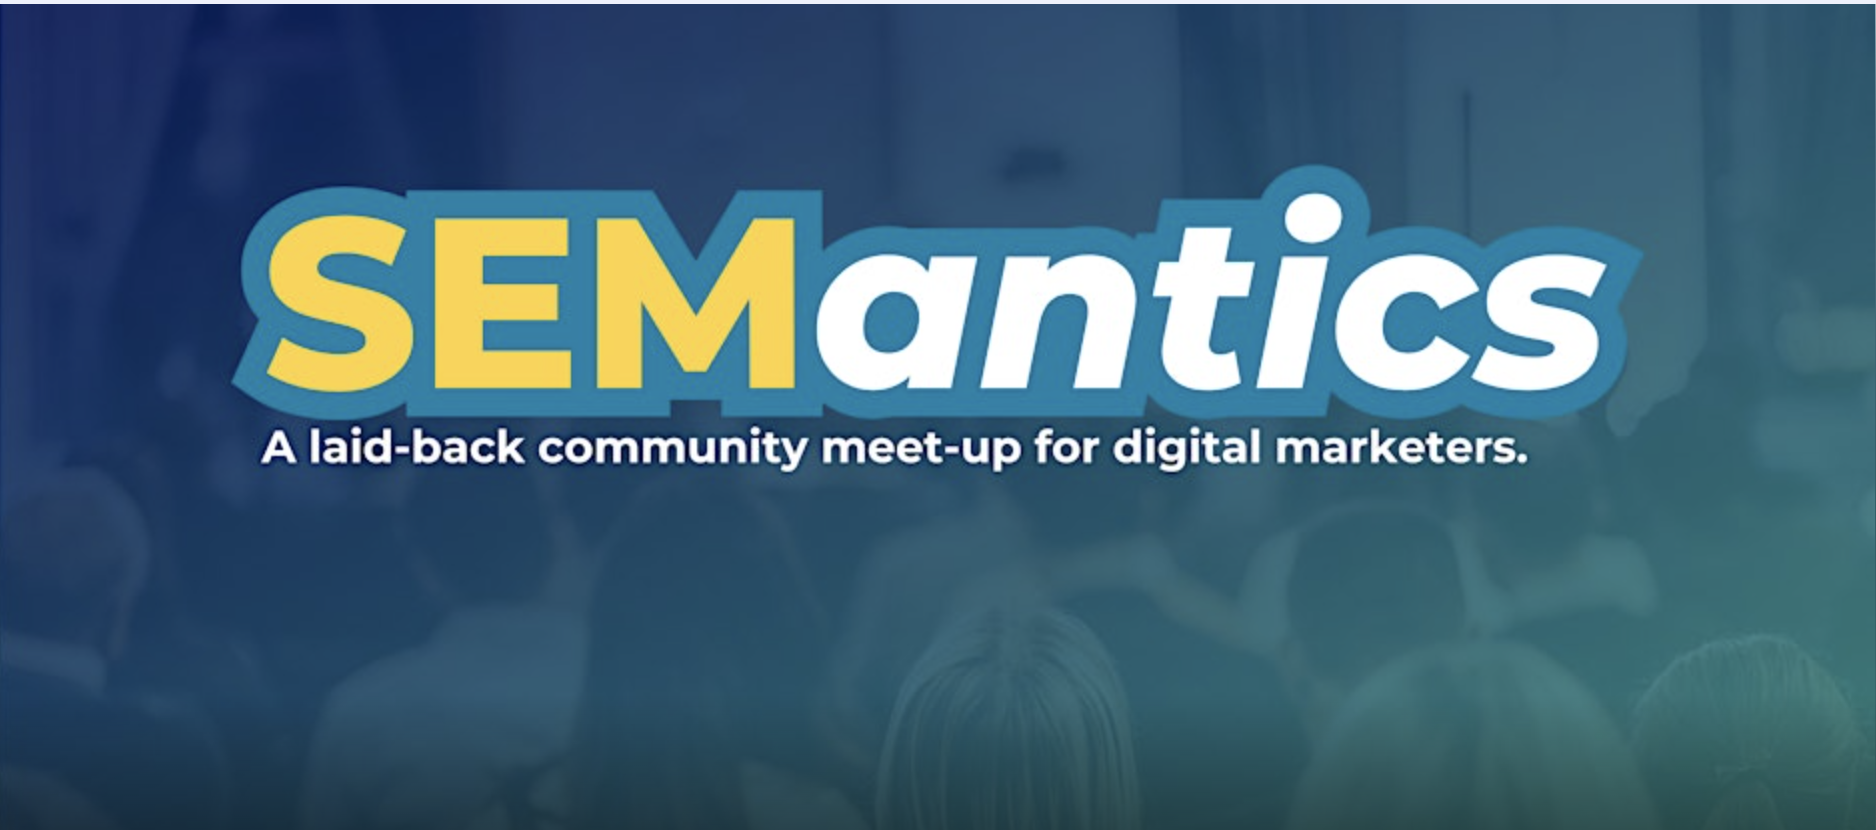 SEMantics: Community meet-up for digital marketers